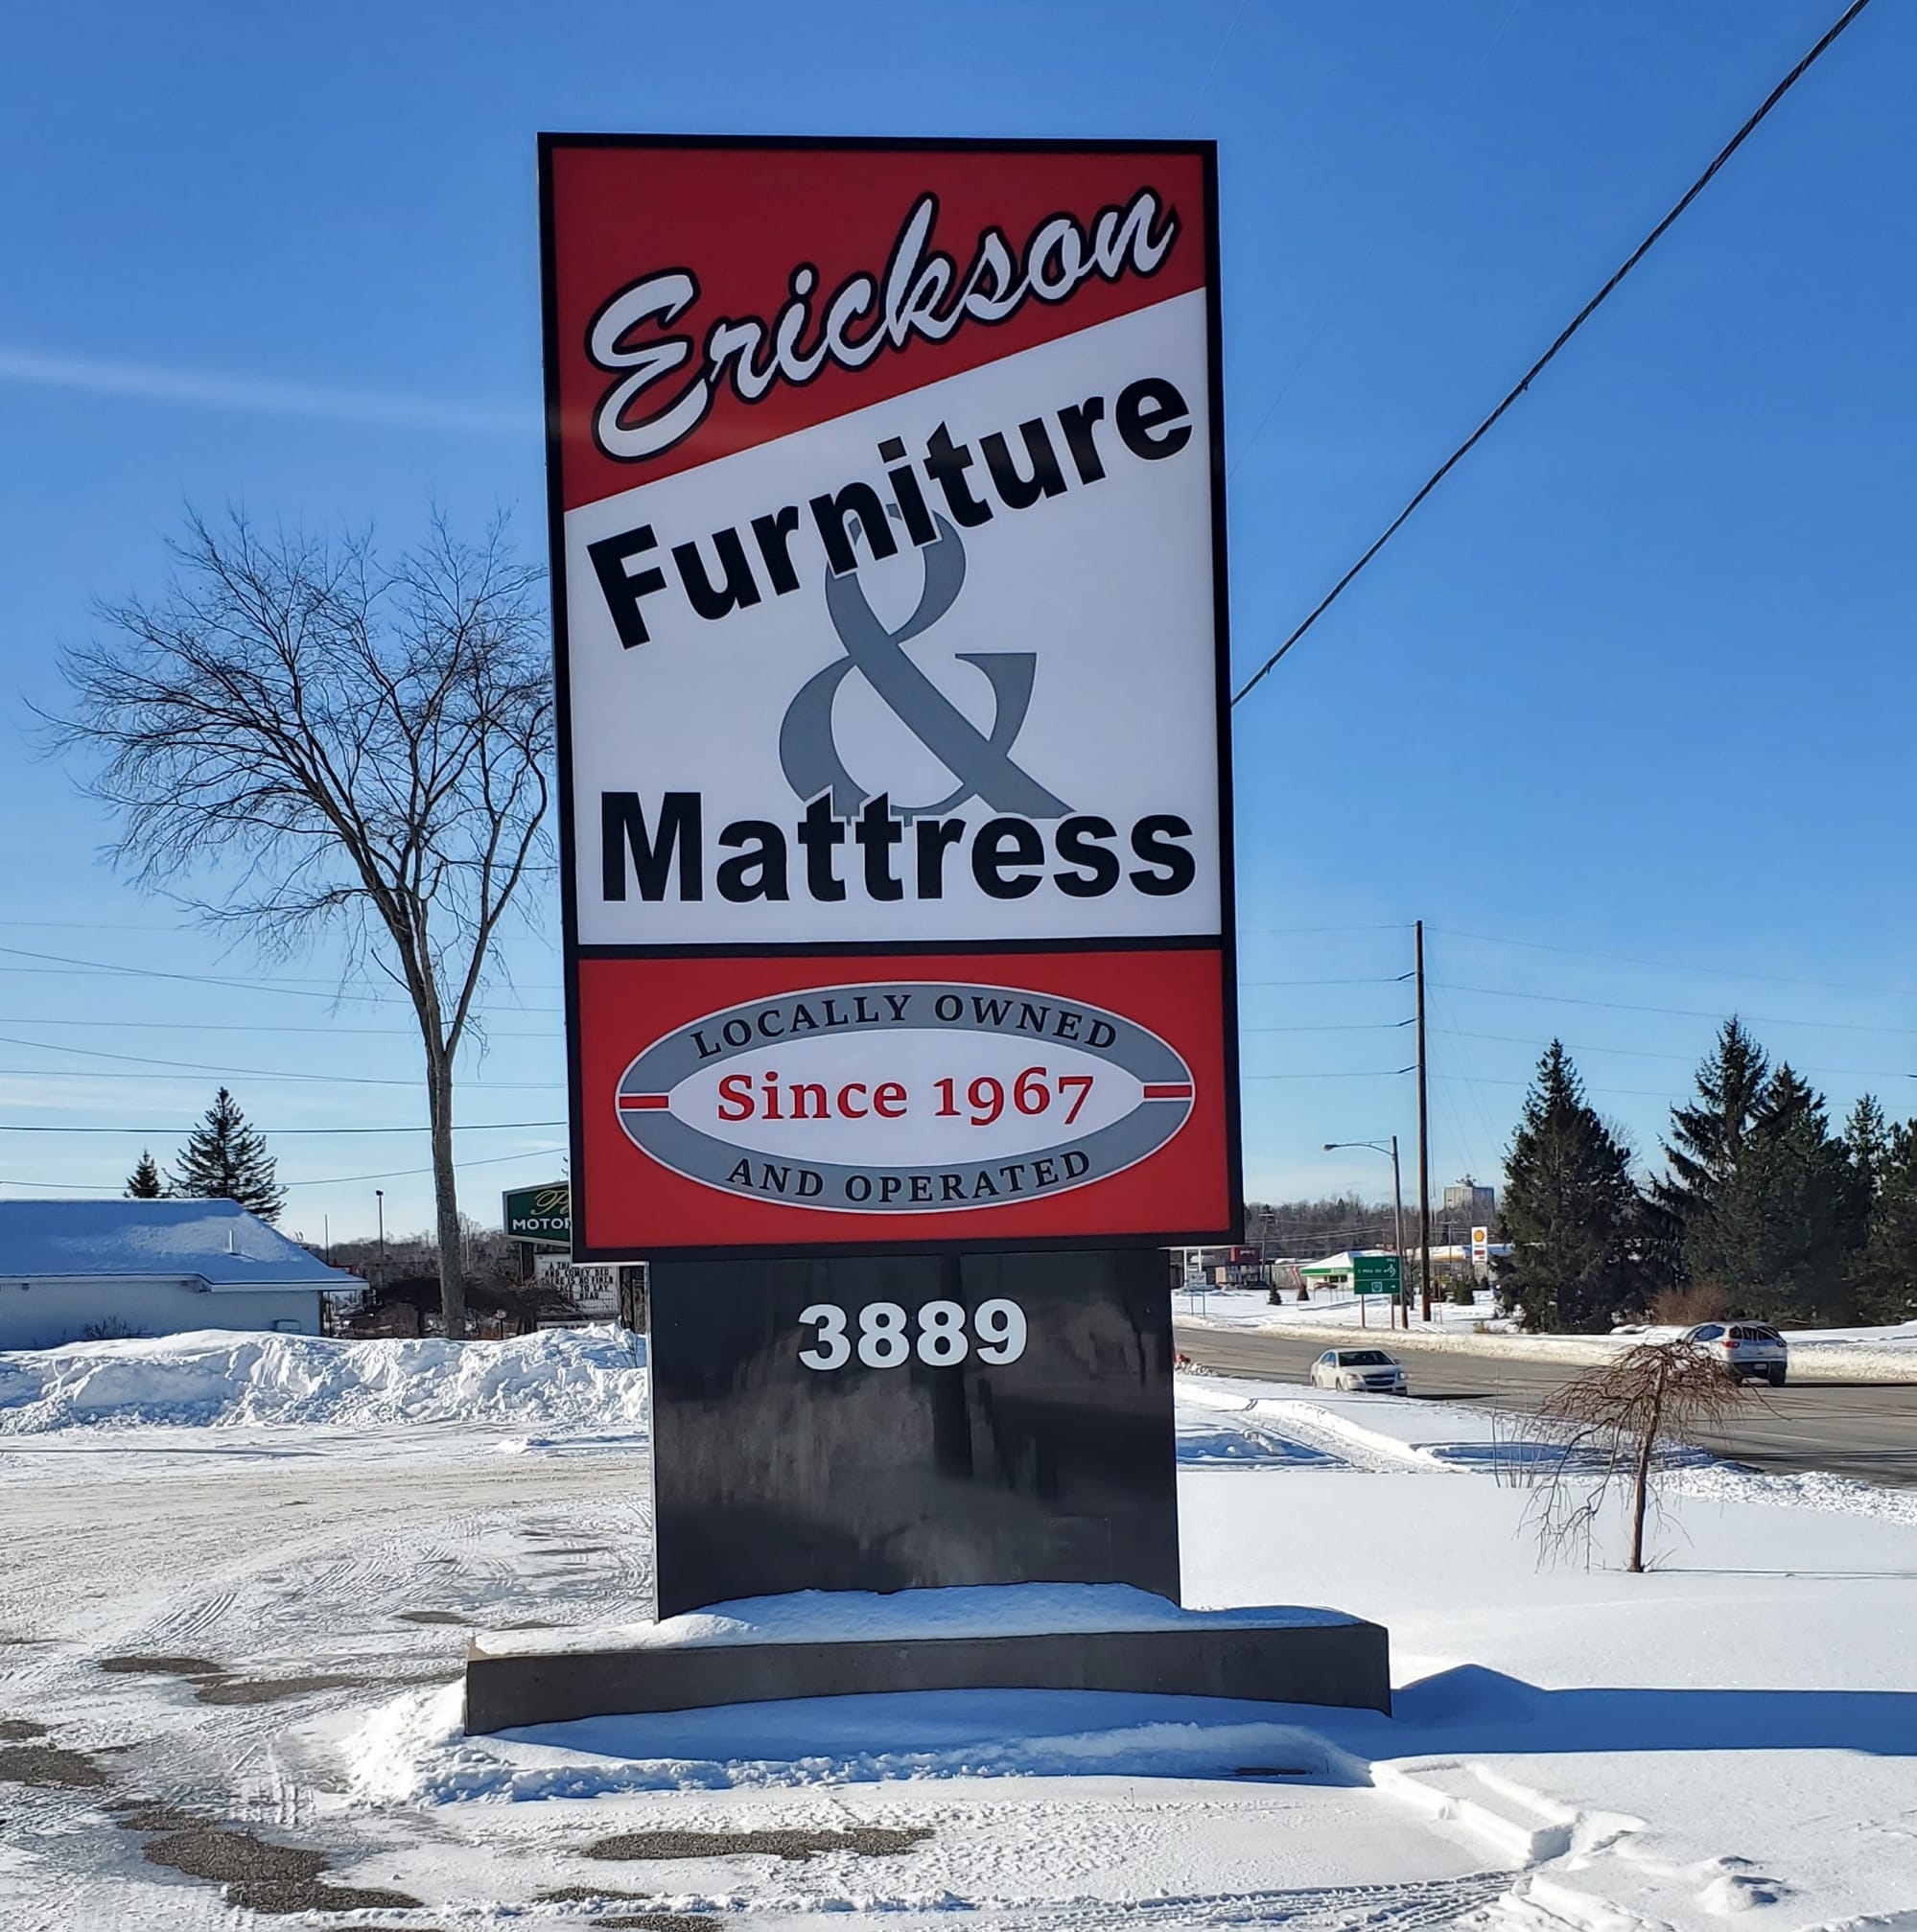 Erickson Furniture and Mattress